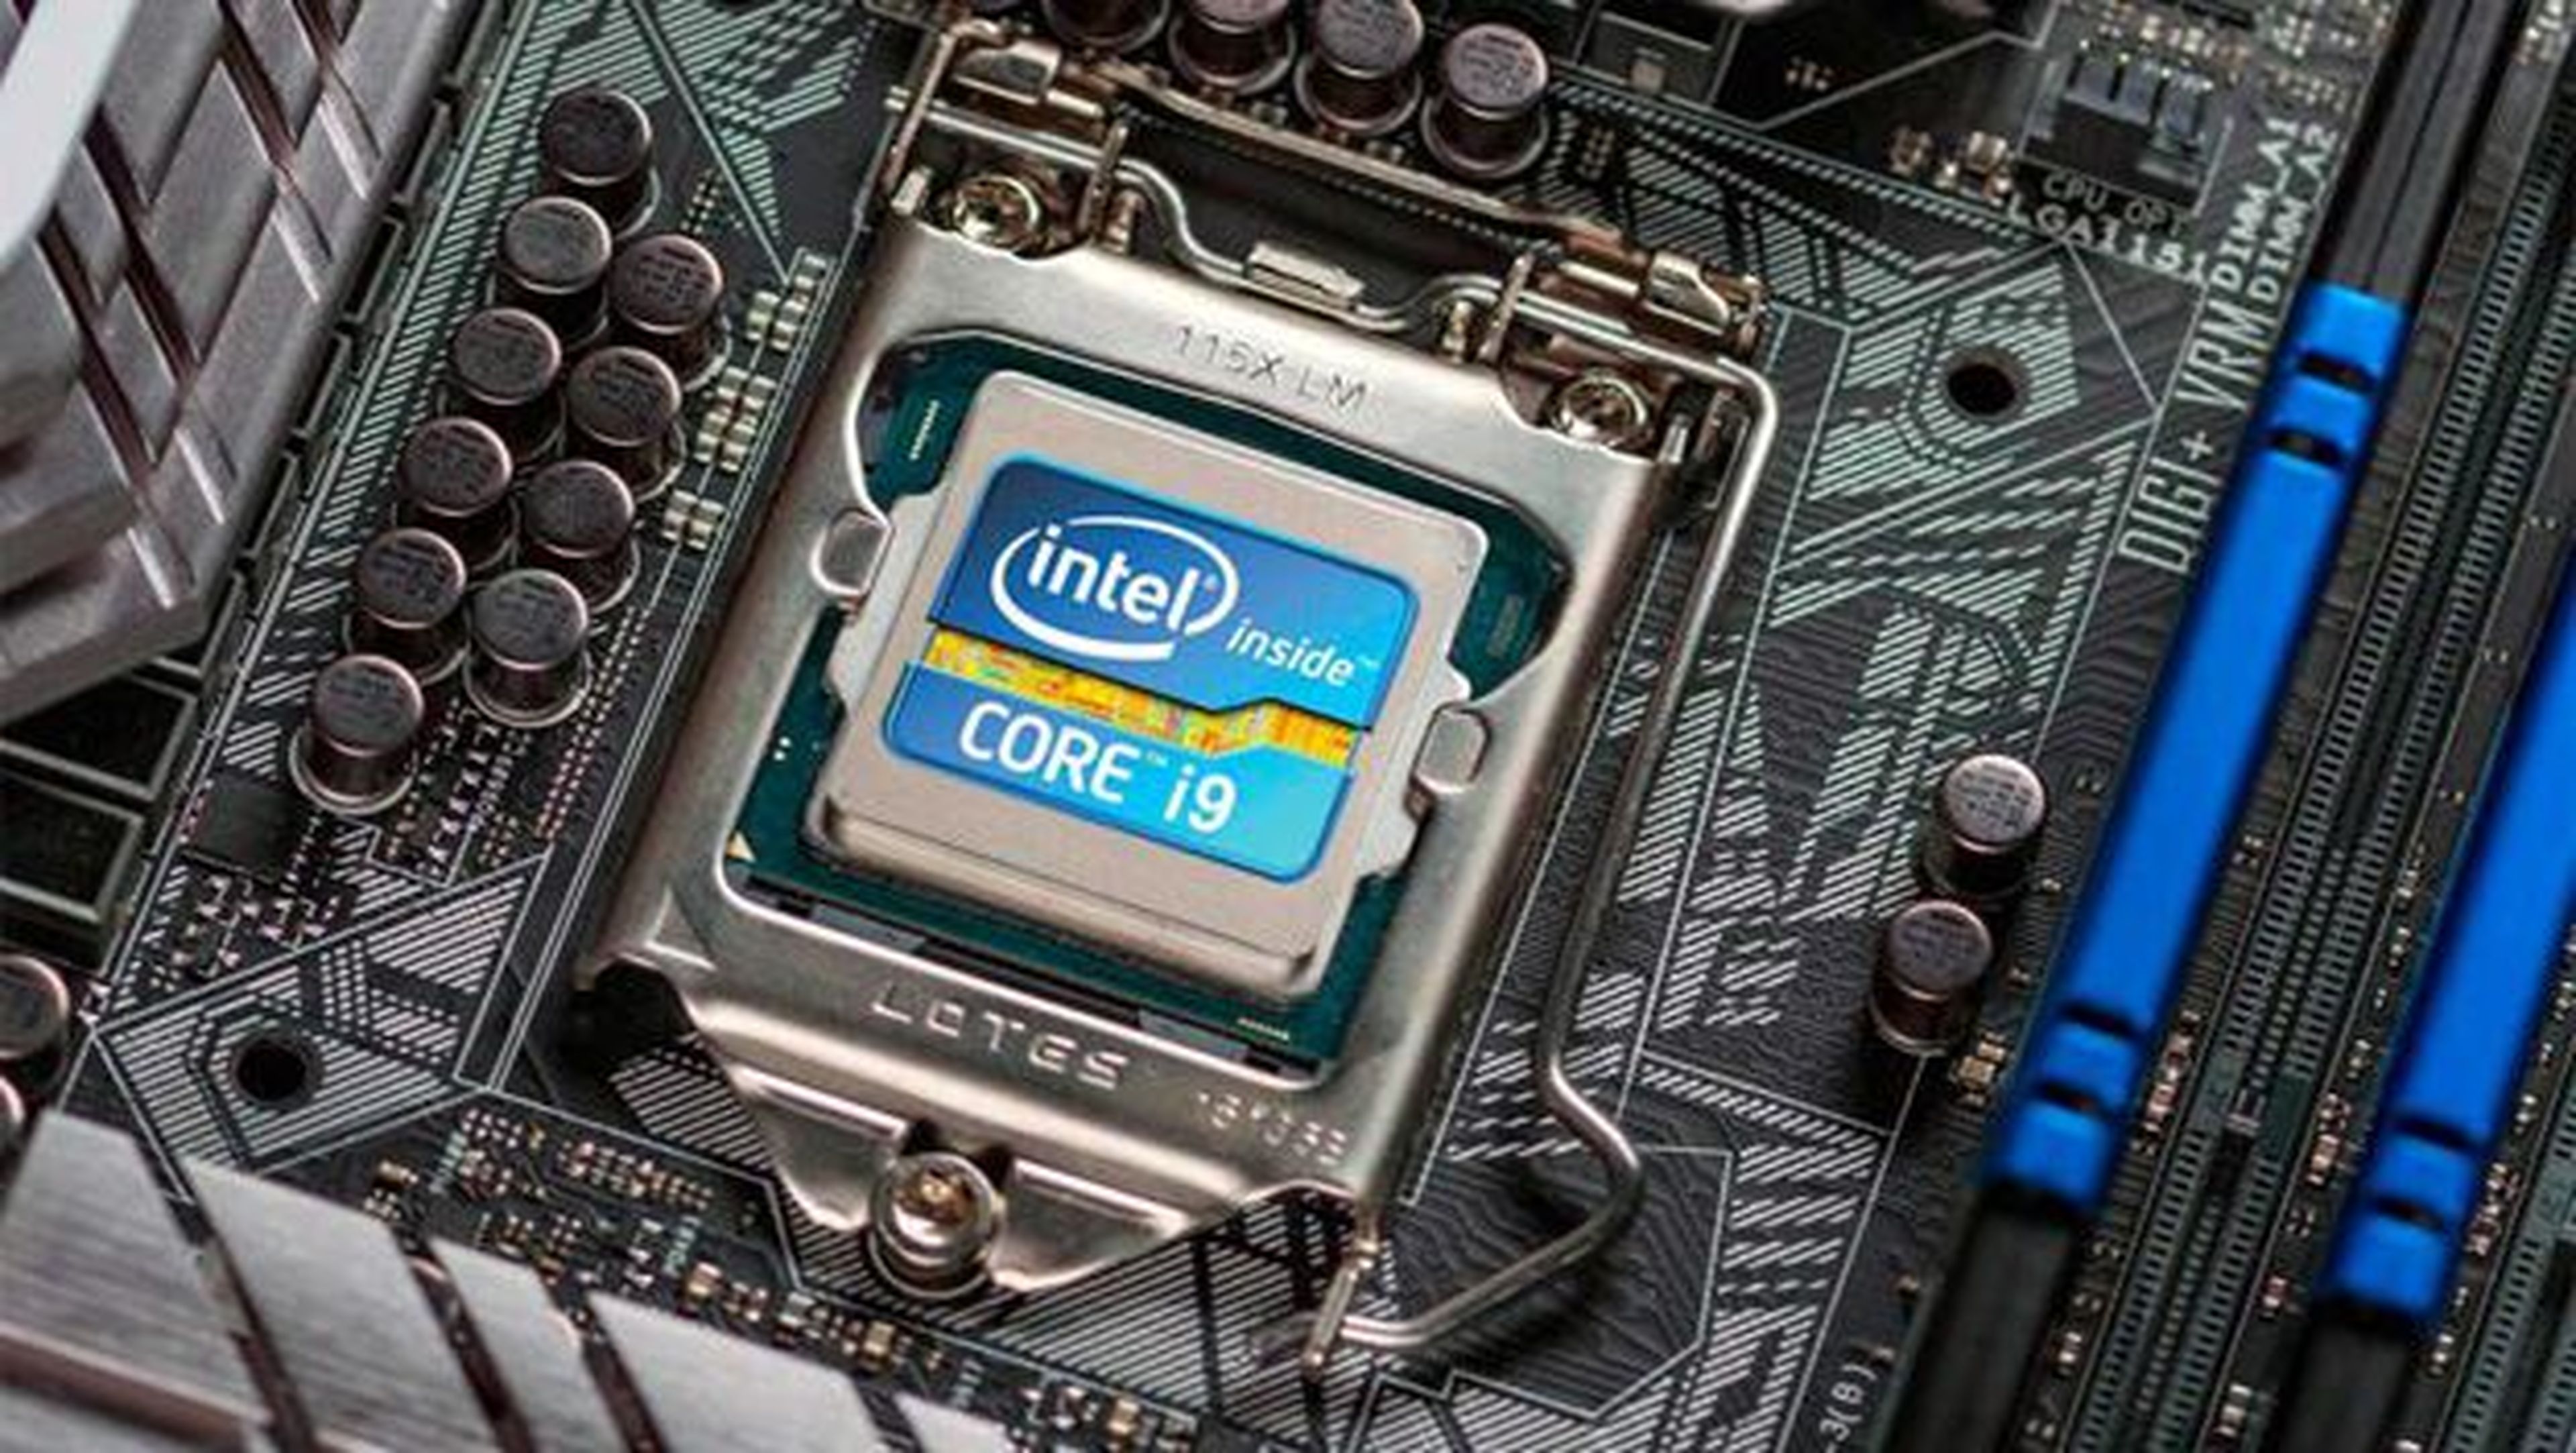 Intel Core i9 8950HK